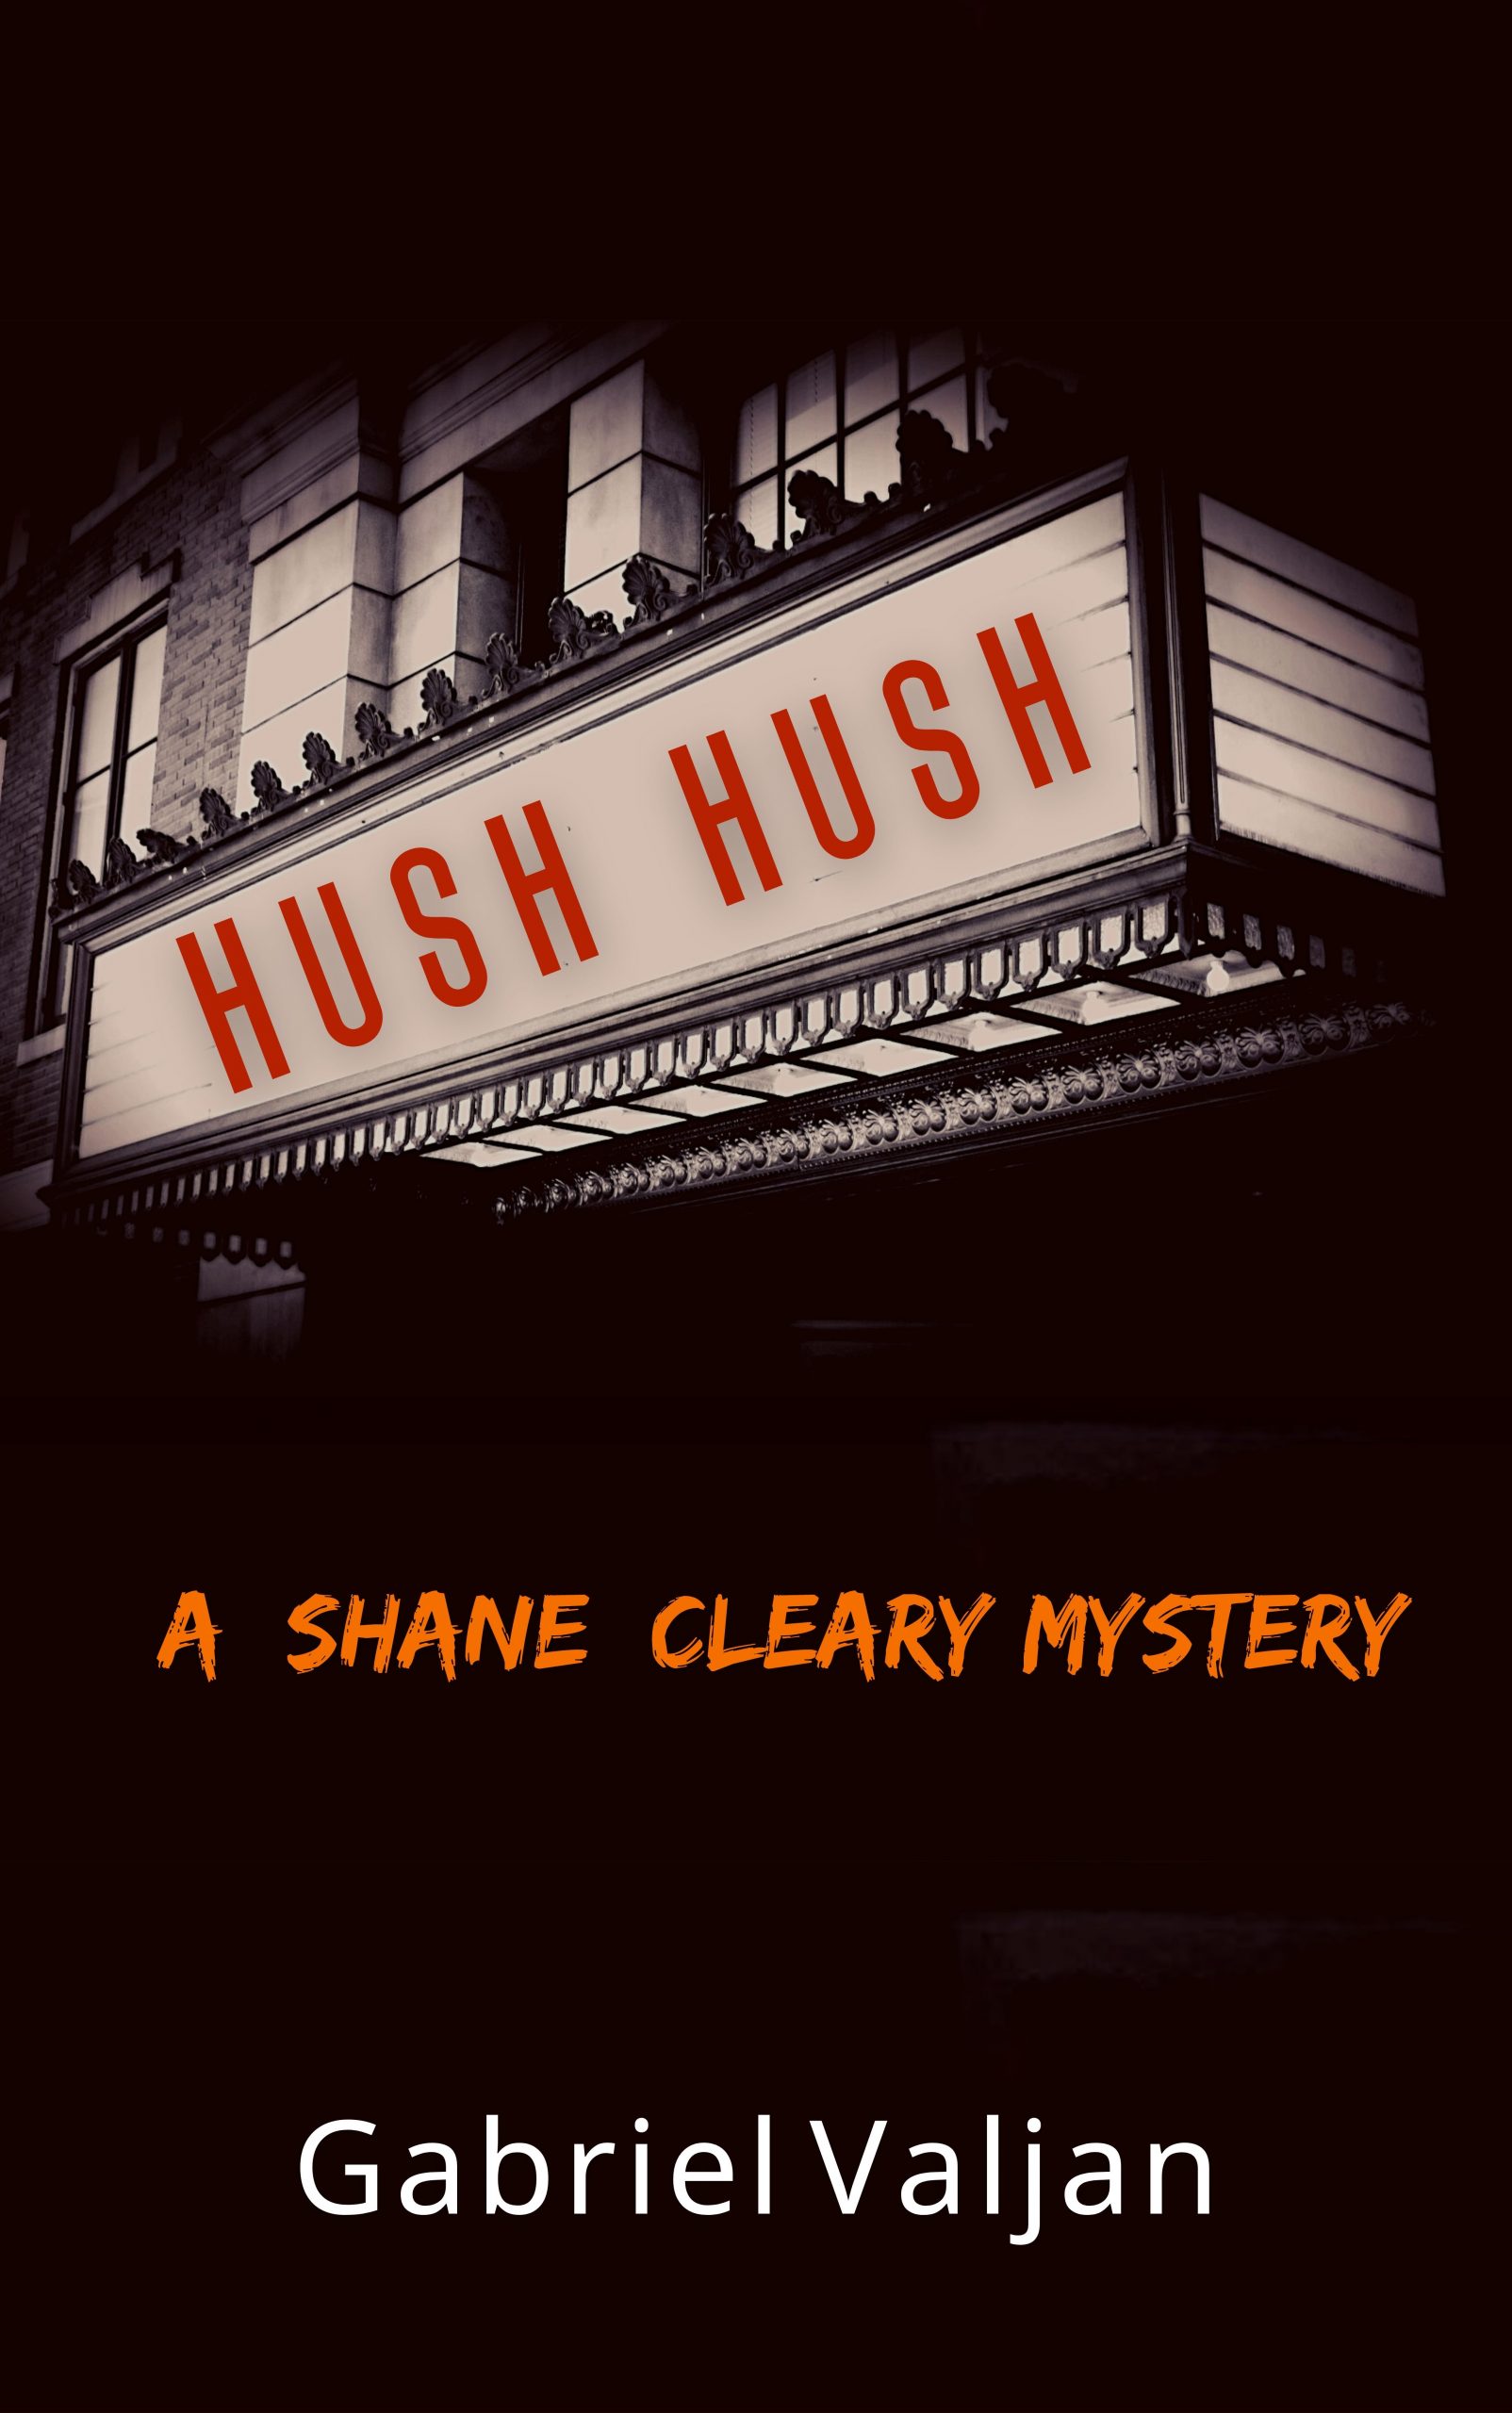 Hush Hush by Gabriel Valjan